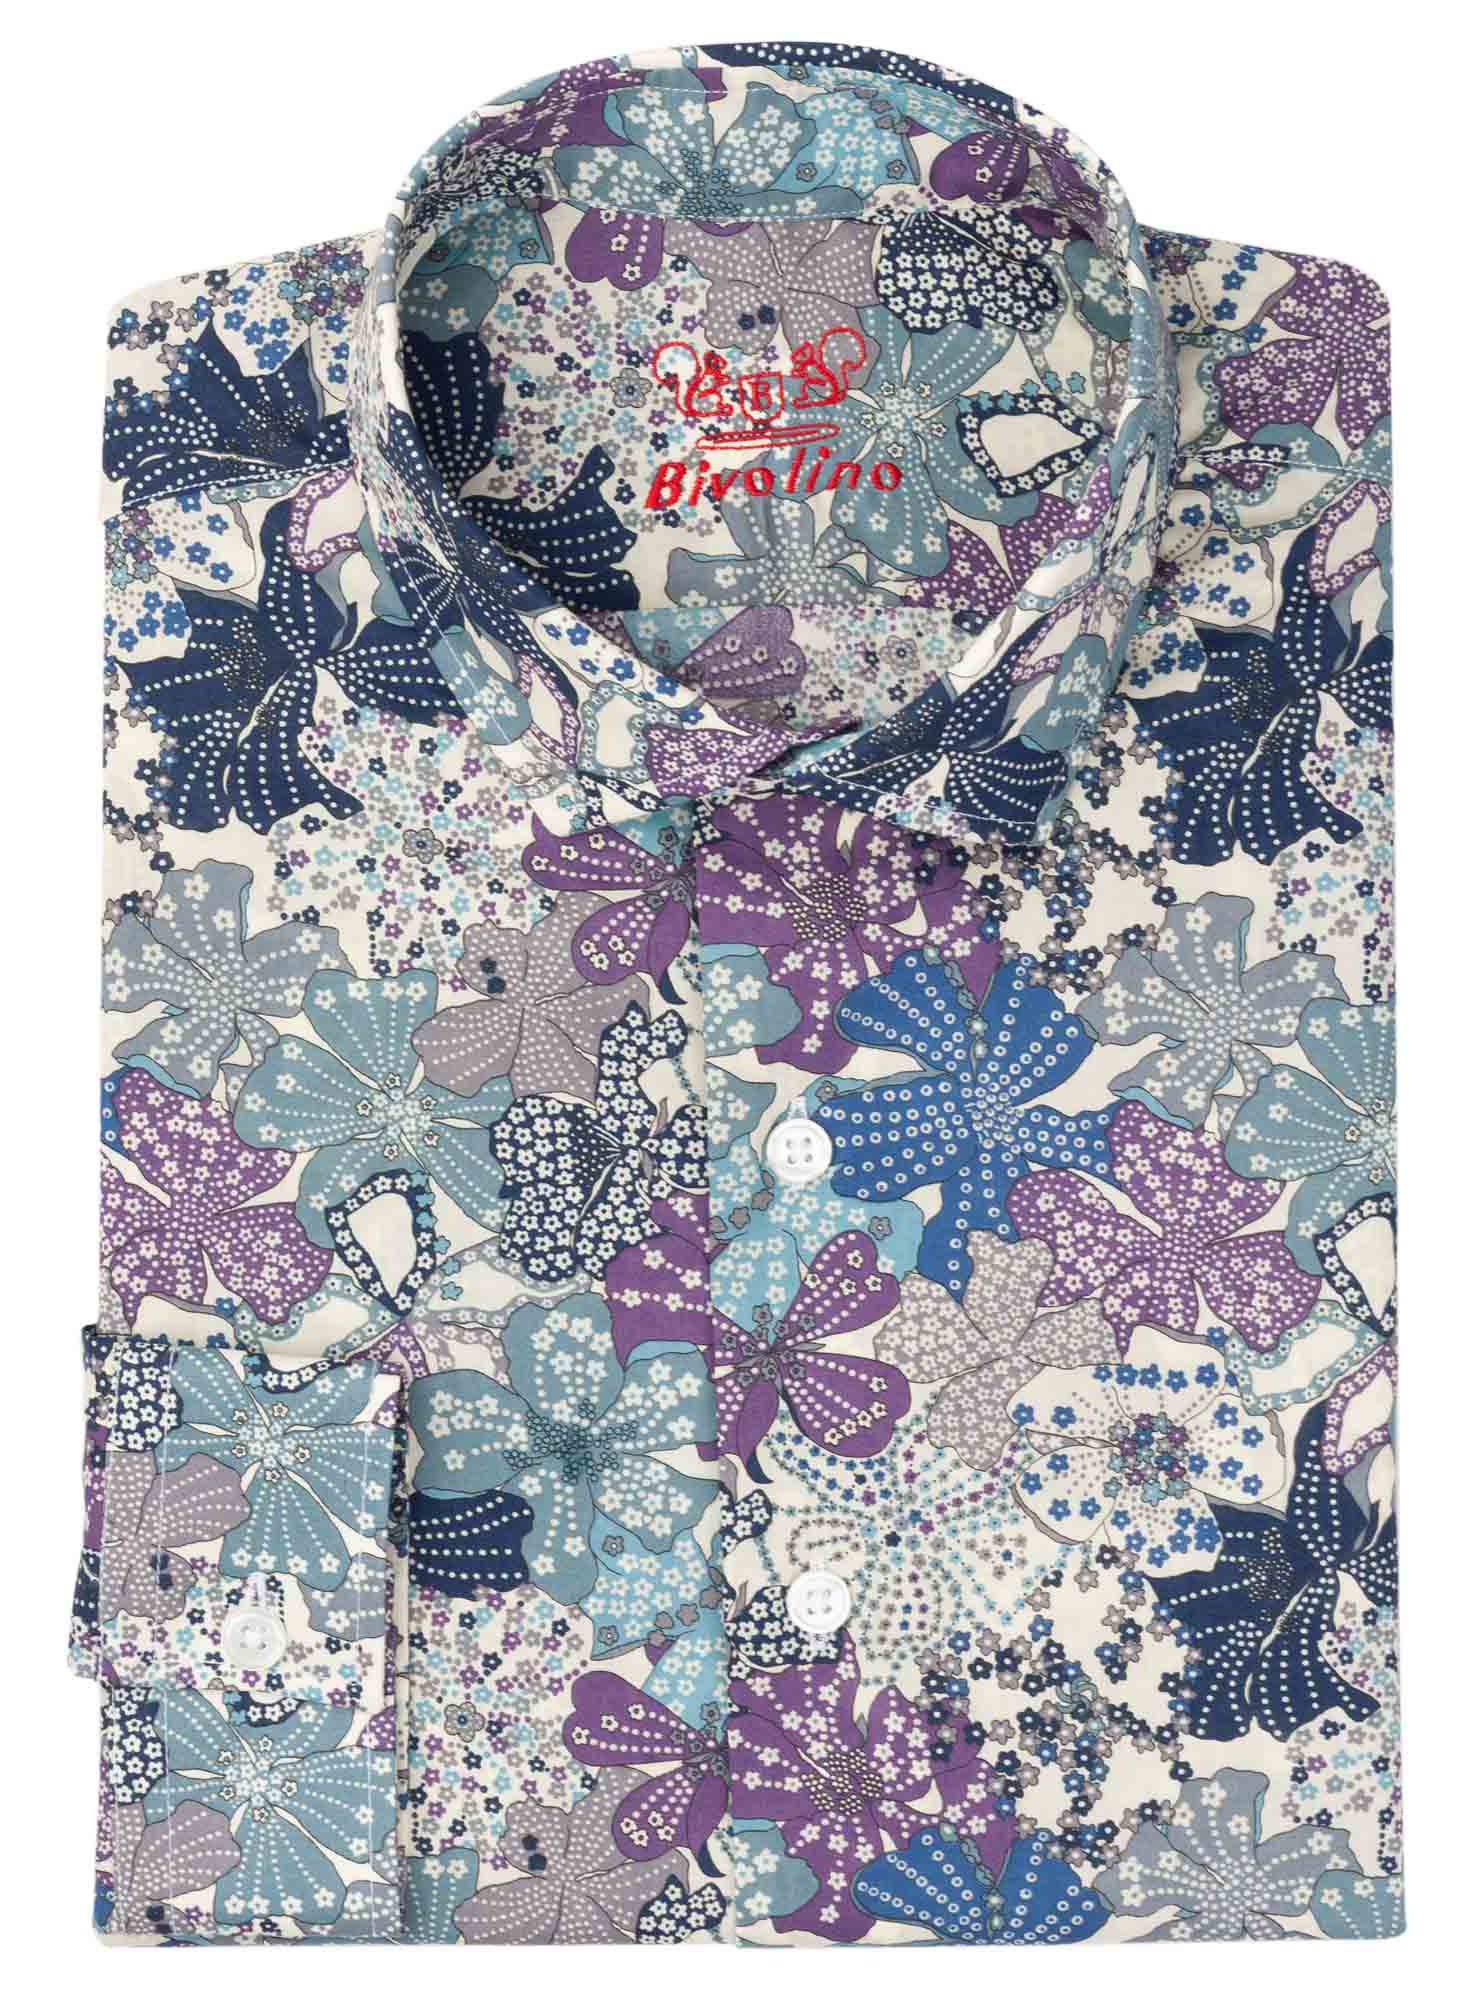 LIBERTINO - Männerhemd Baumwolle Cashmere Blumen - LIBERTY 7